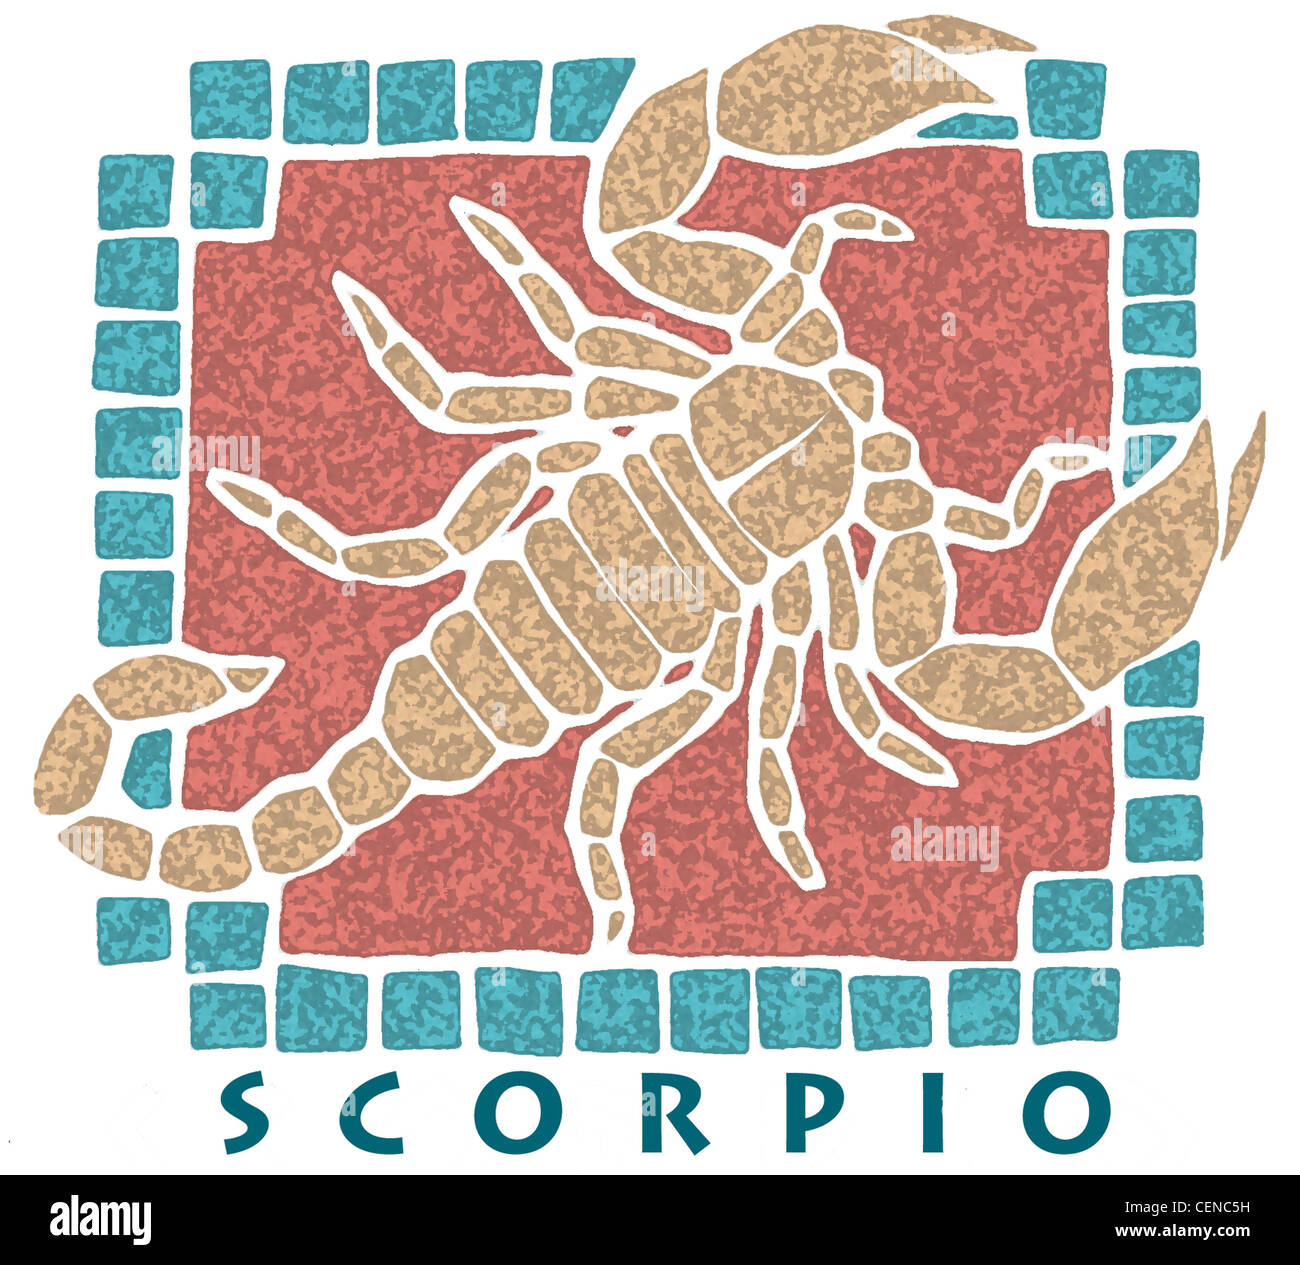 Star sign Scorpio aqua blue mosaic border illustration of a scorpio ...